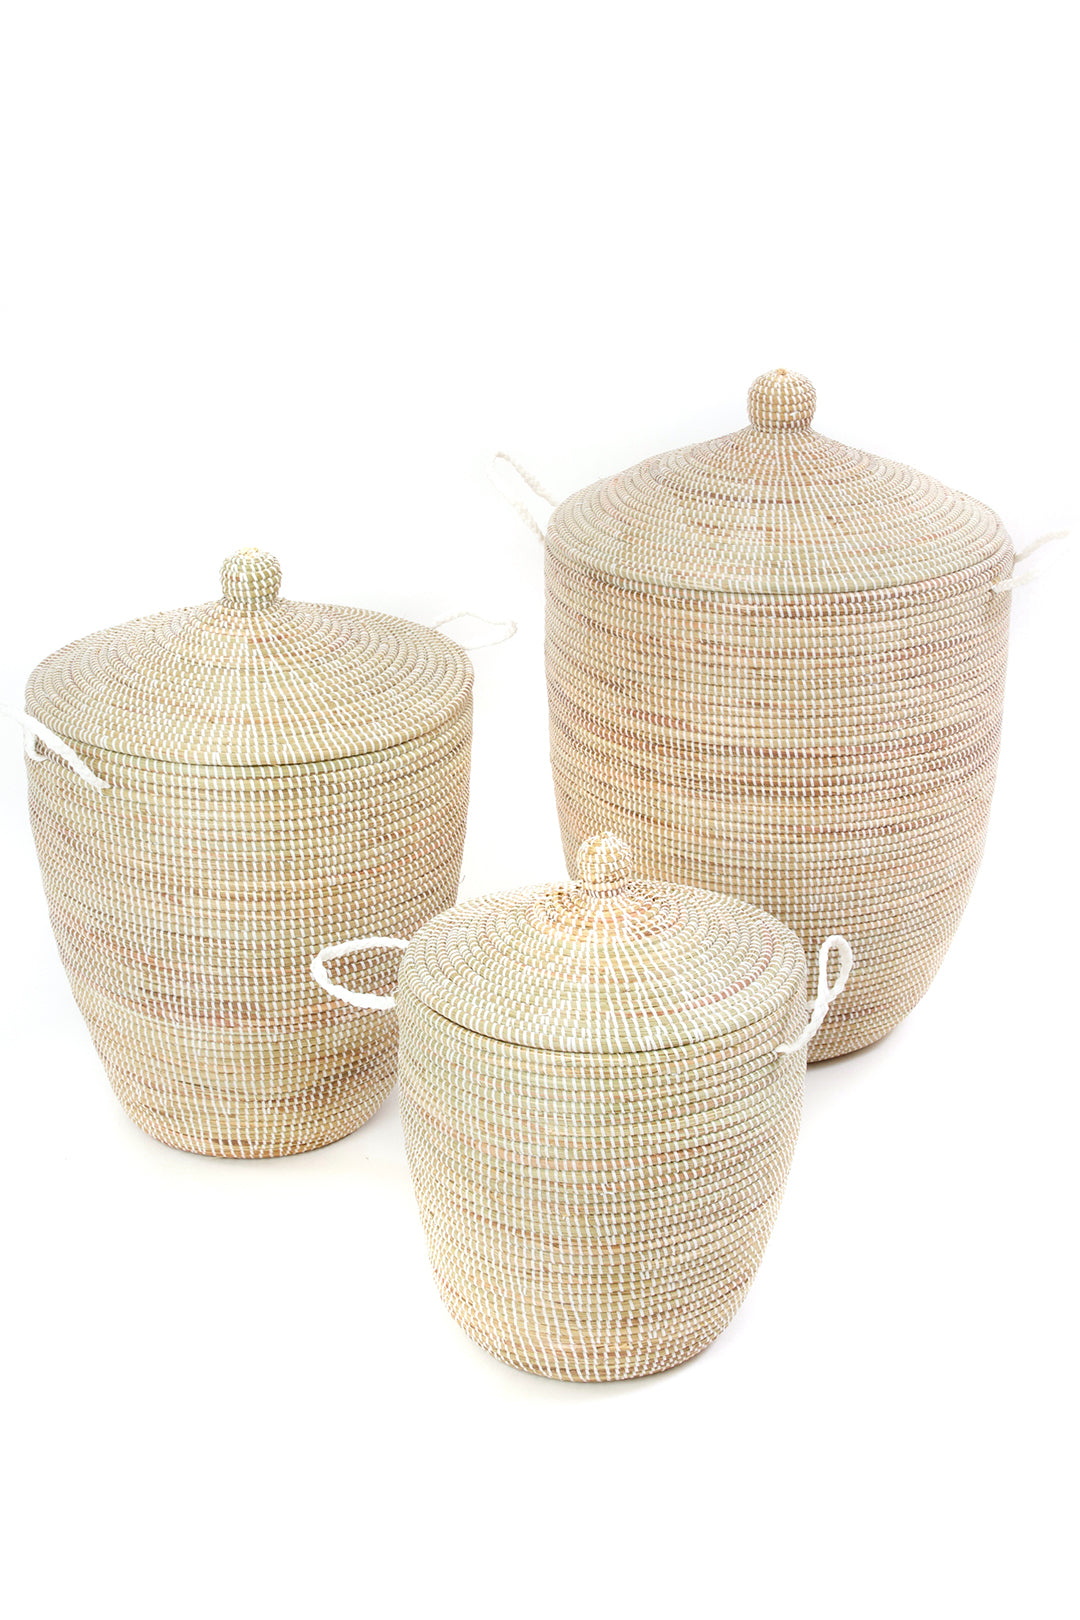 Set of Three Solid White Hamper Baskets